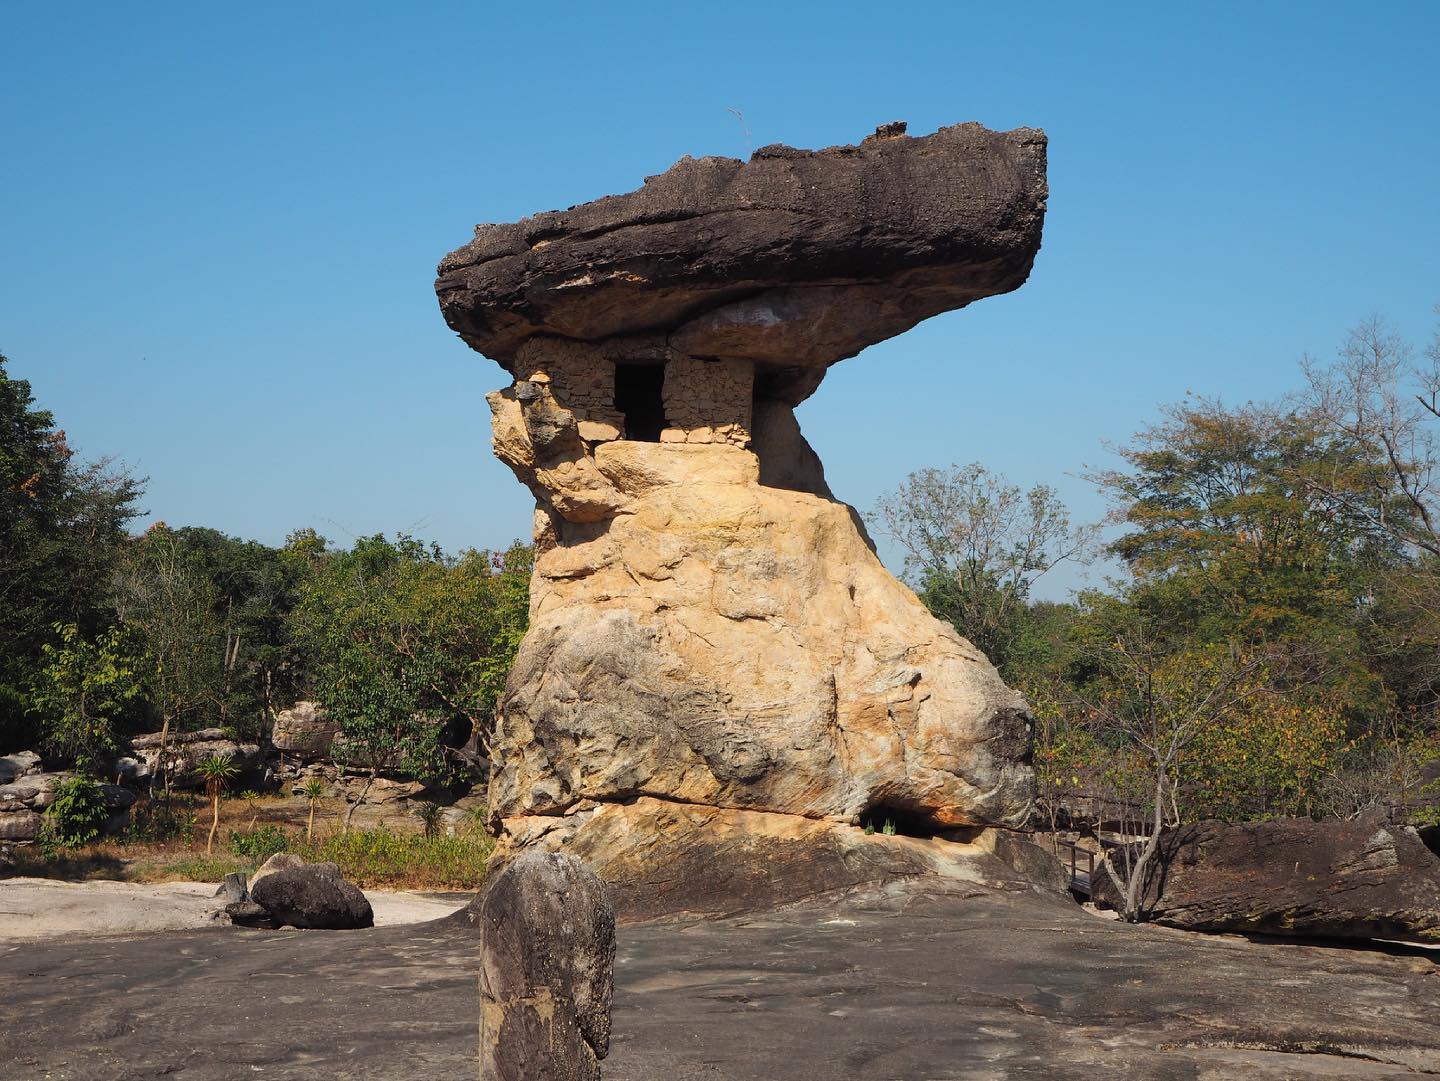 8 historical parks in Thailand - bizarre rocks